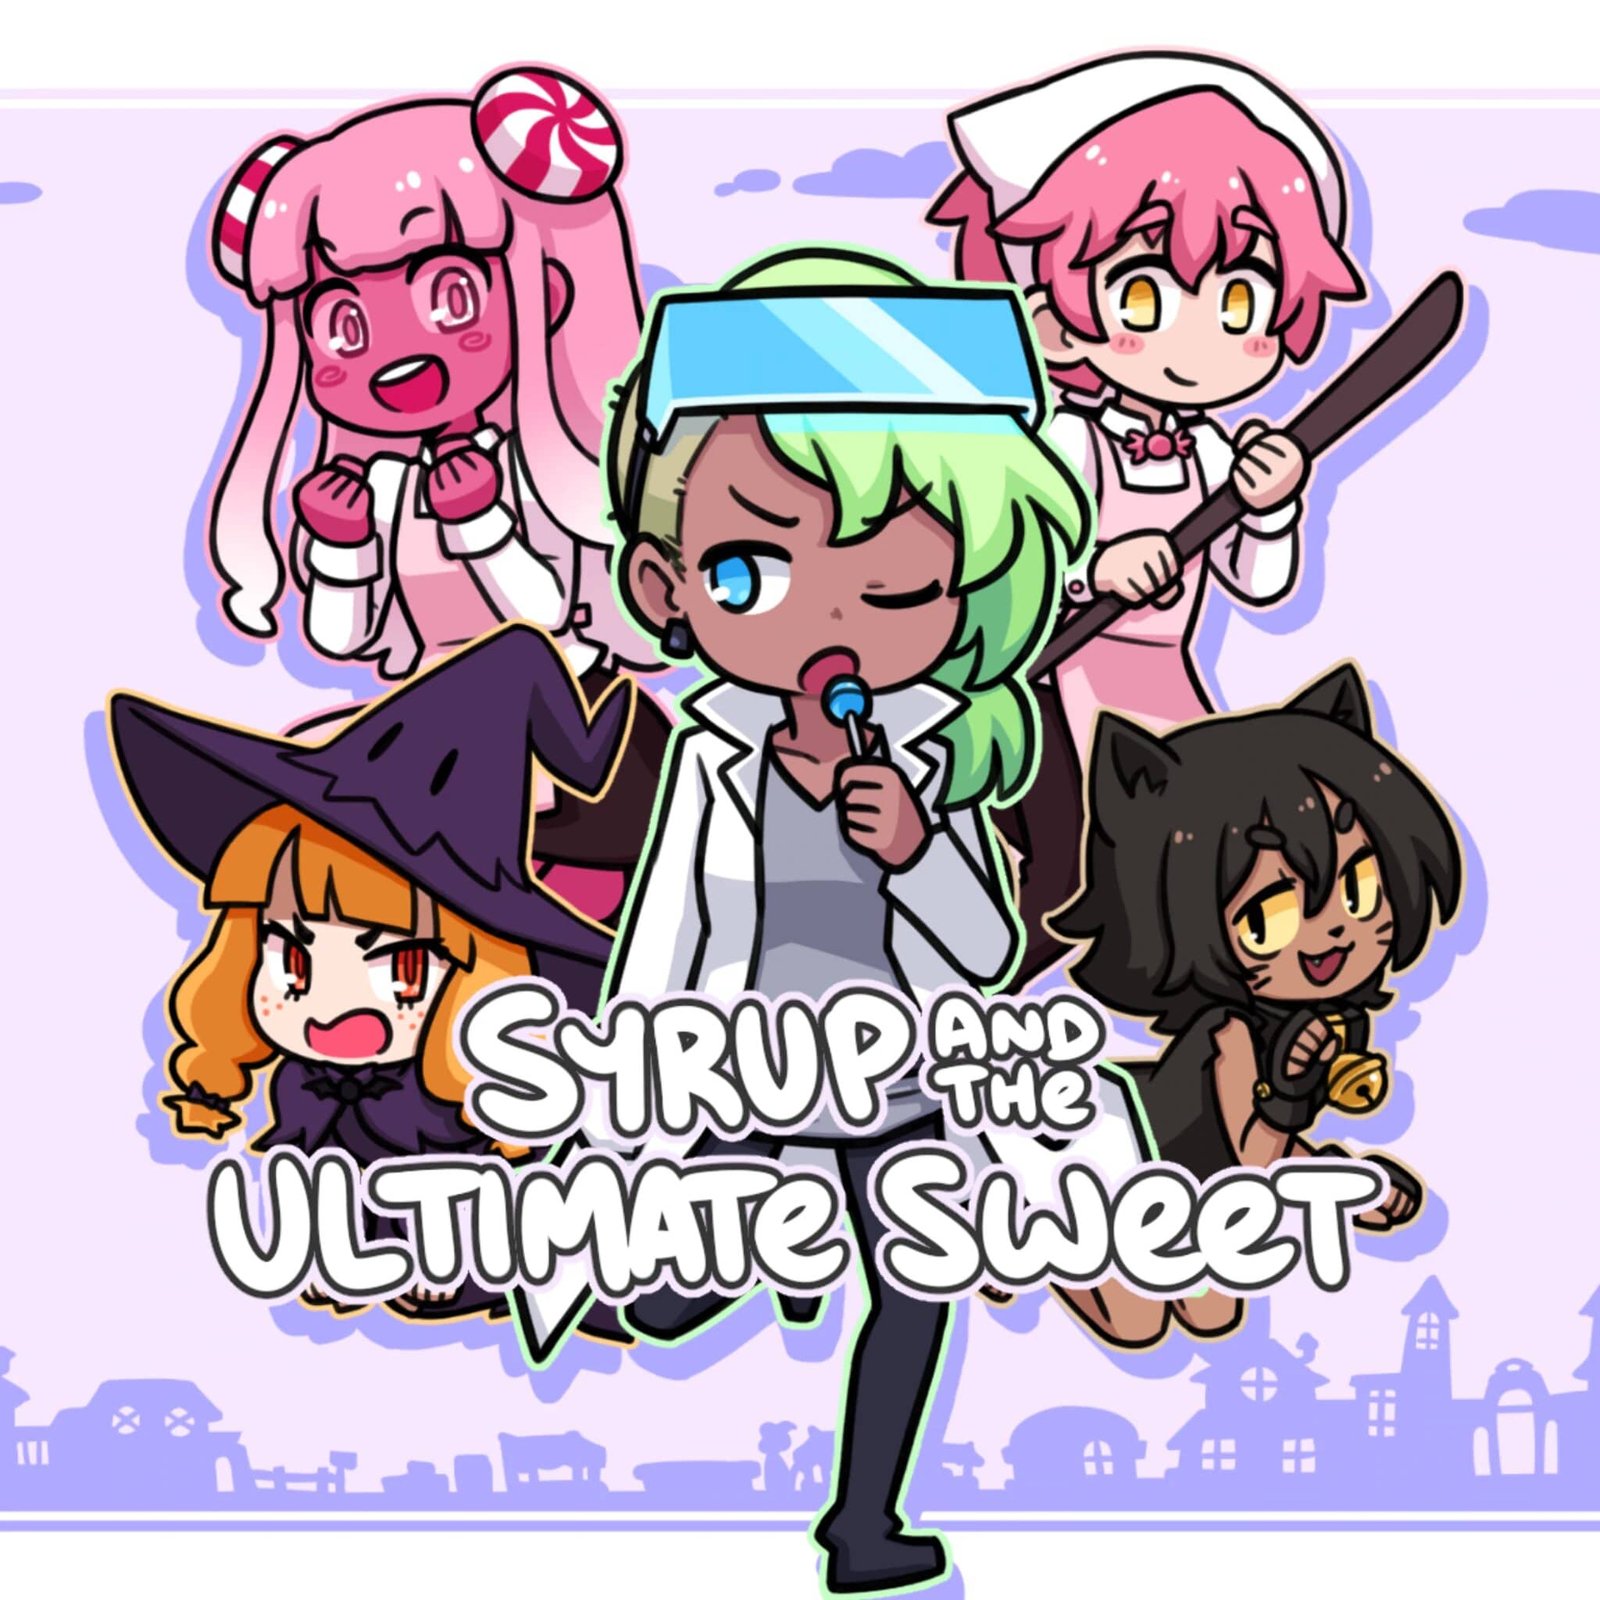 jaquette du jeu vidéo Syrup and the Ultimate Sweet